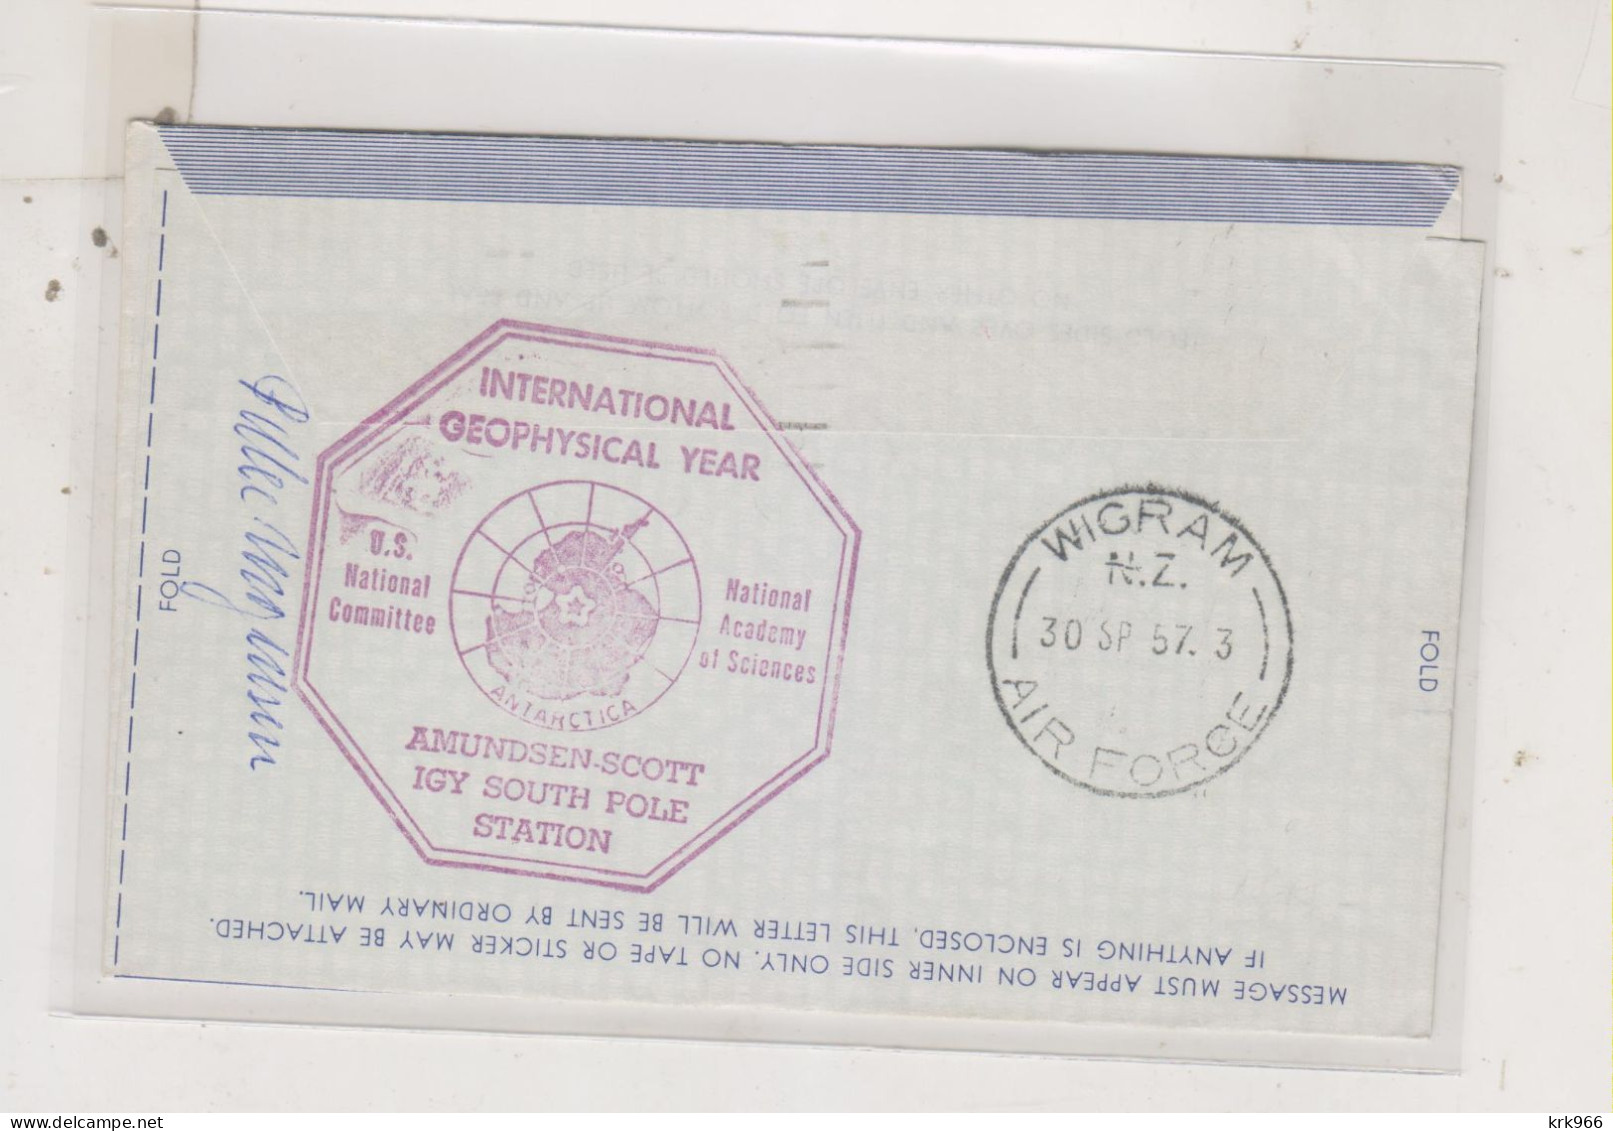 UNITED NATIONS 1957 Nice Airmail Stationery NEW YORK To AMUNDSEN SCOTT IGY SOUTH POLE STATION - Lettres & Documents